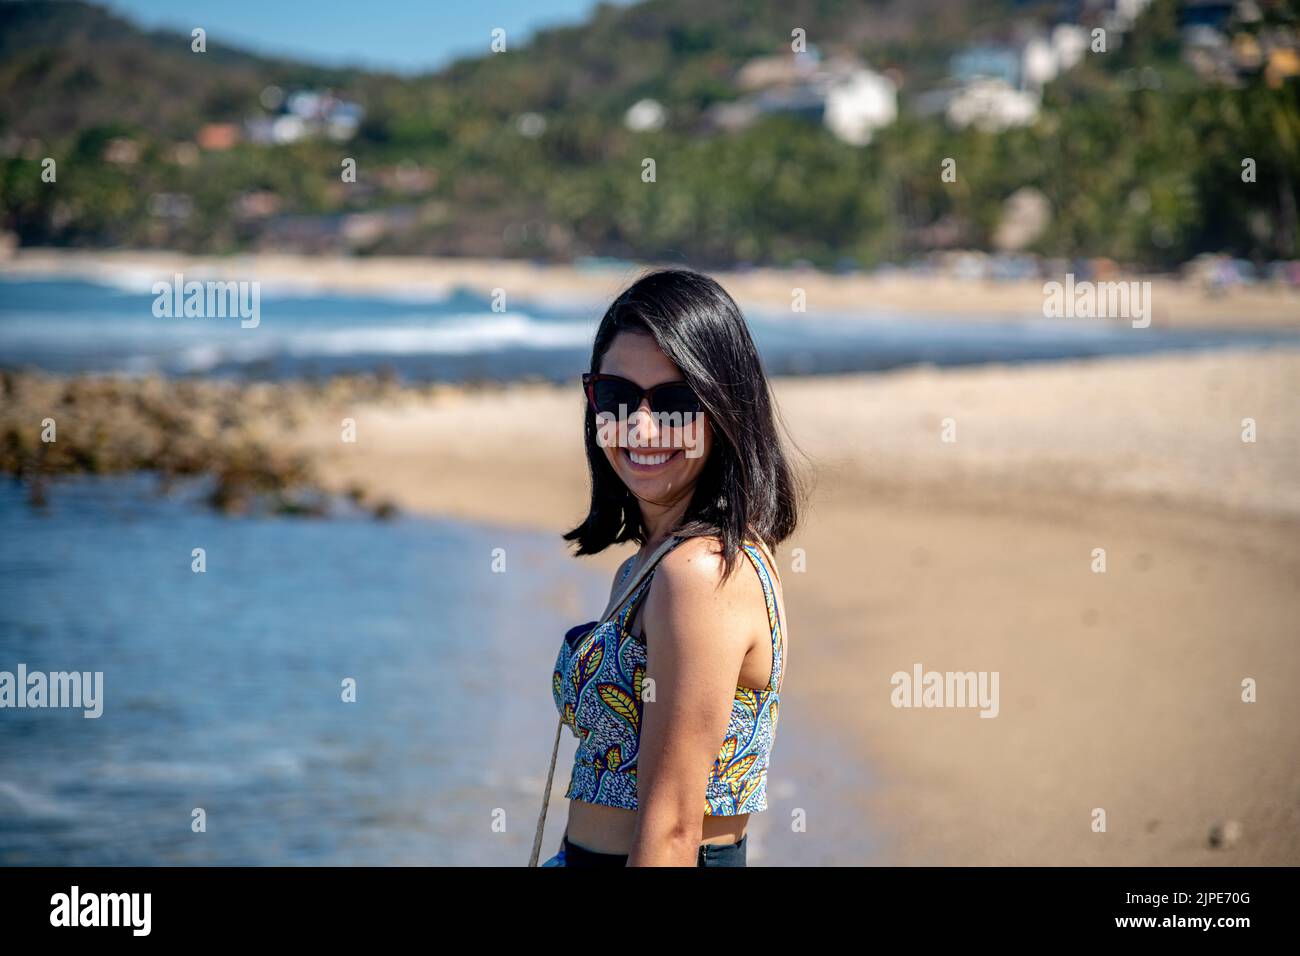 A woman posing for a photo on a beach in Sayulita, Mexico Stock Photo